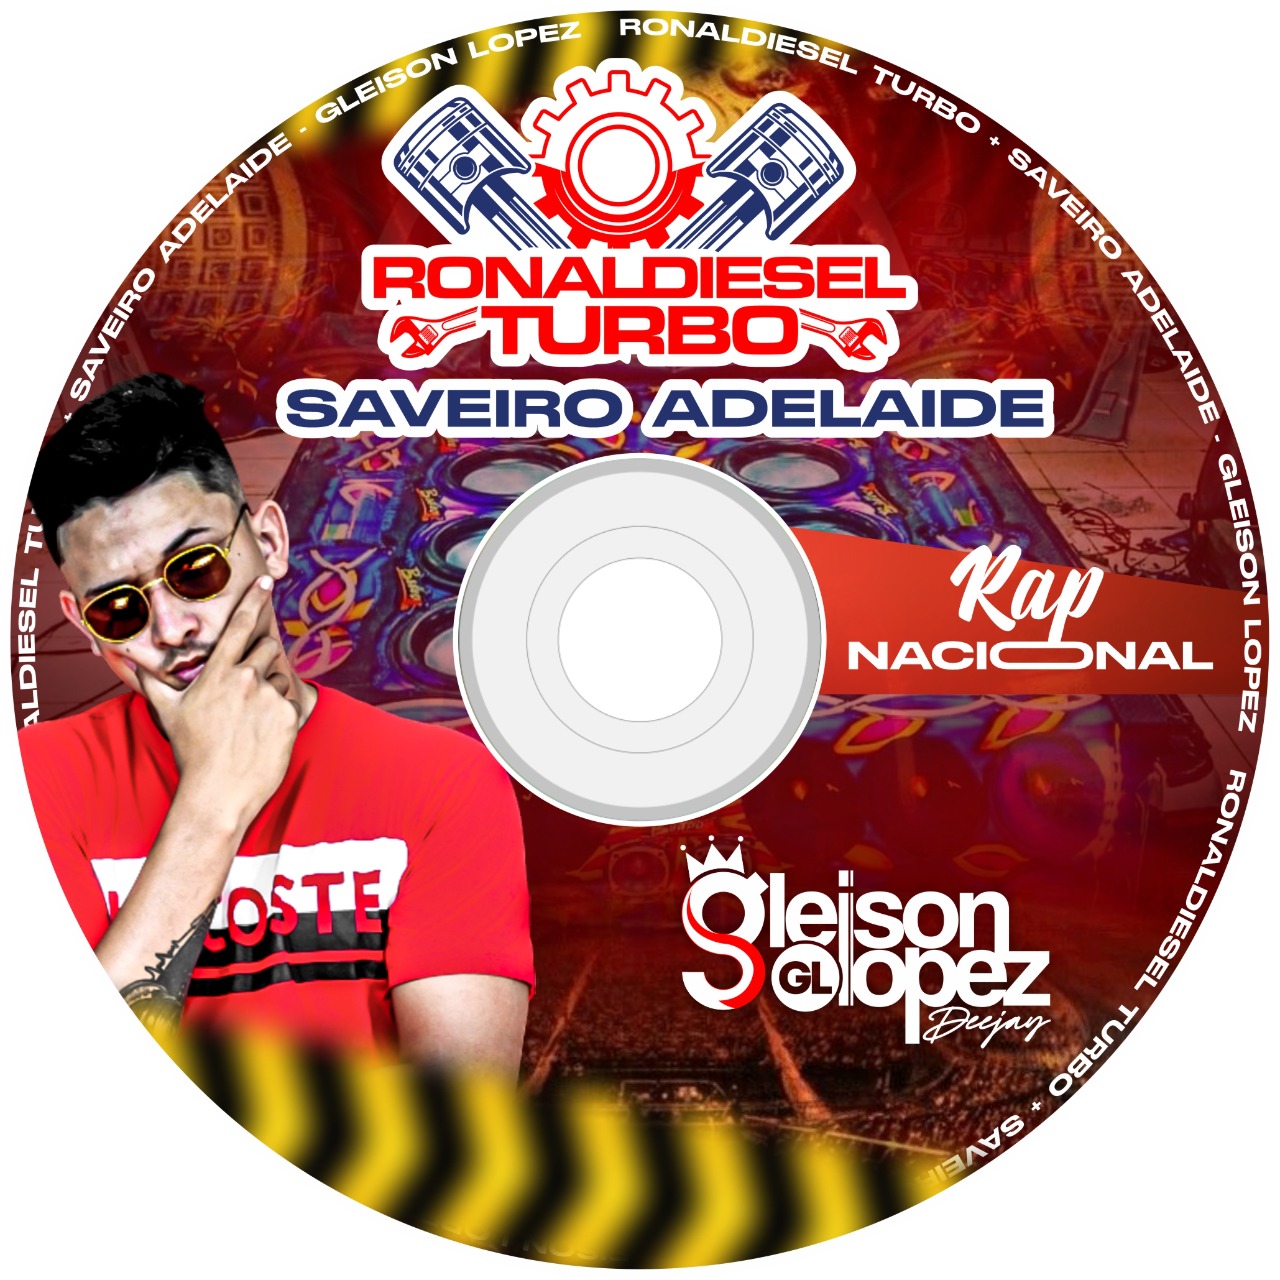 CD Ronaldiesel Turbo + Saveiro Adelaide - RAP NACIONAL - Gleison Lopez